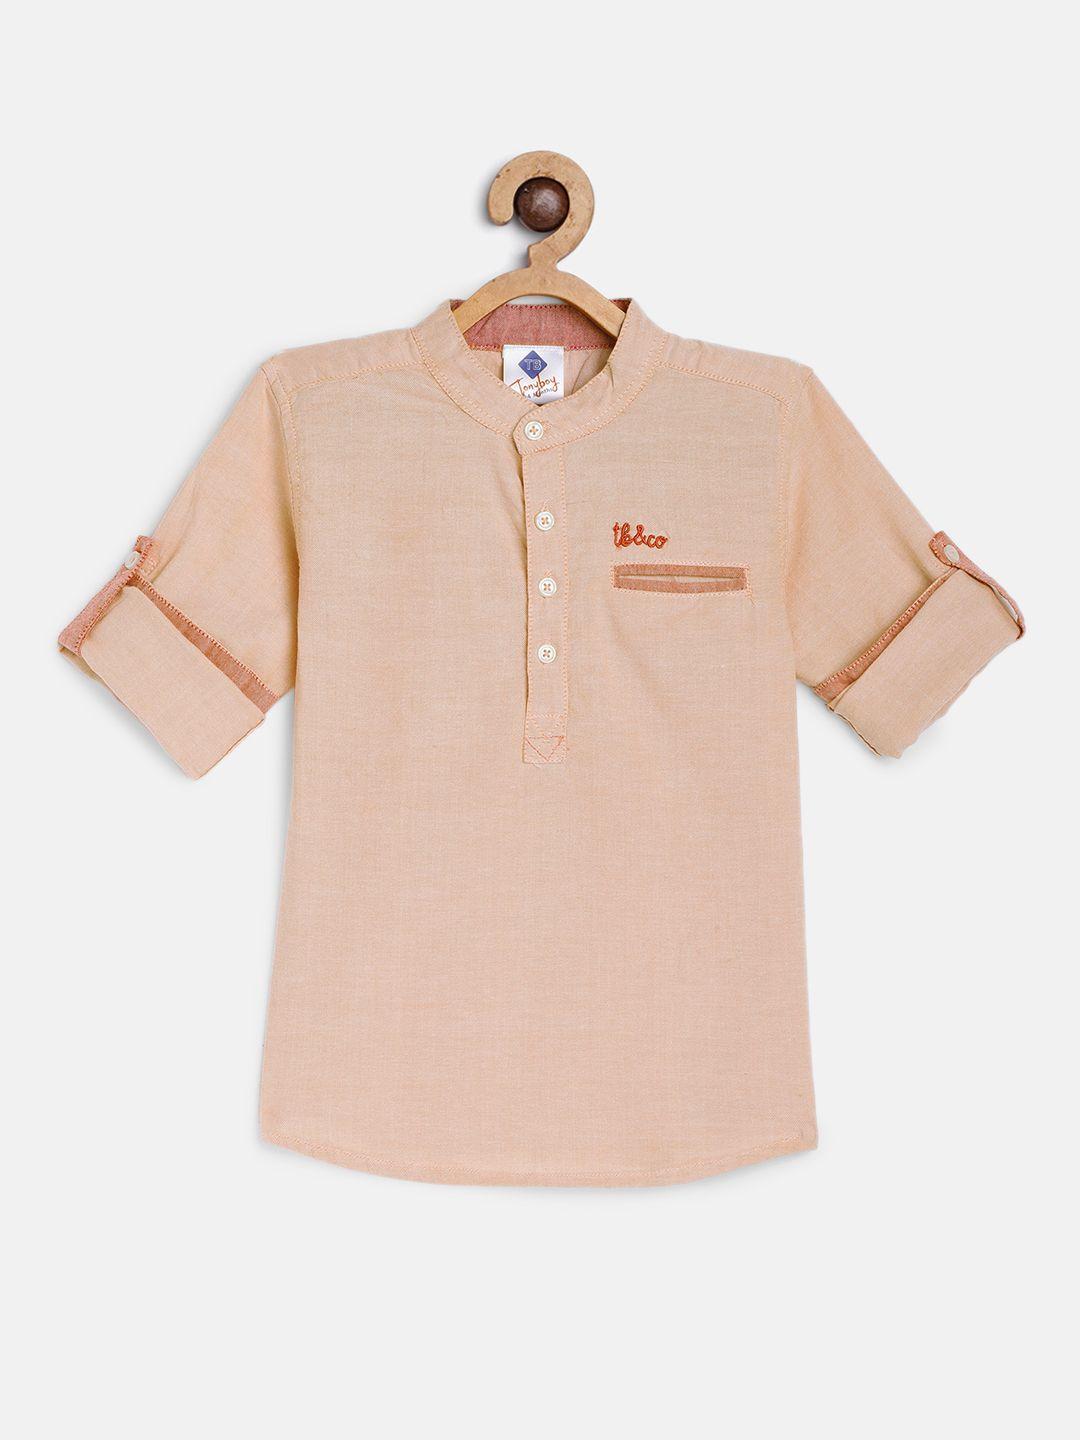 tonyboy boys orange solid pure cotton casual shirt